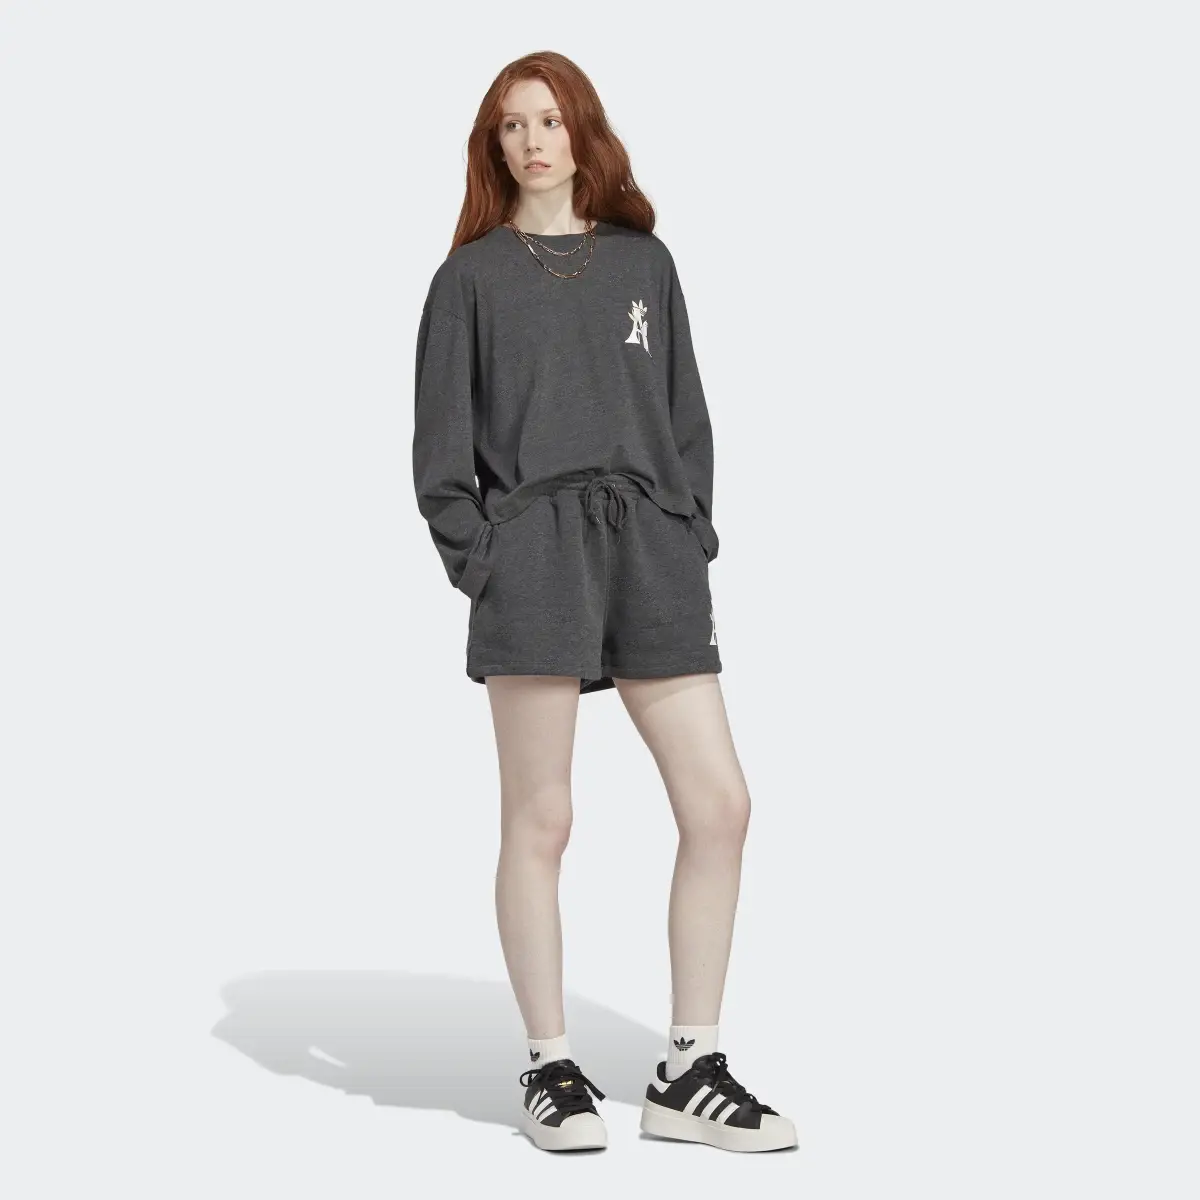 Adidas Originals x Moomin Sweat Shorts. 3